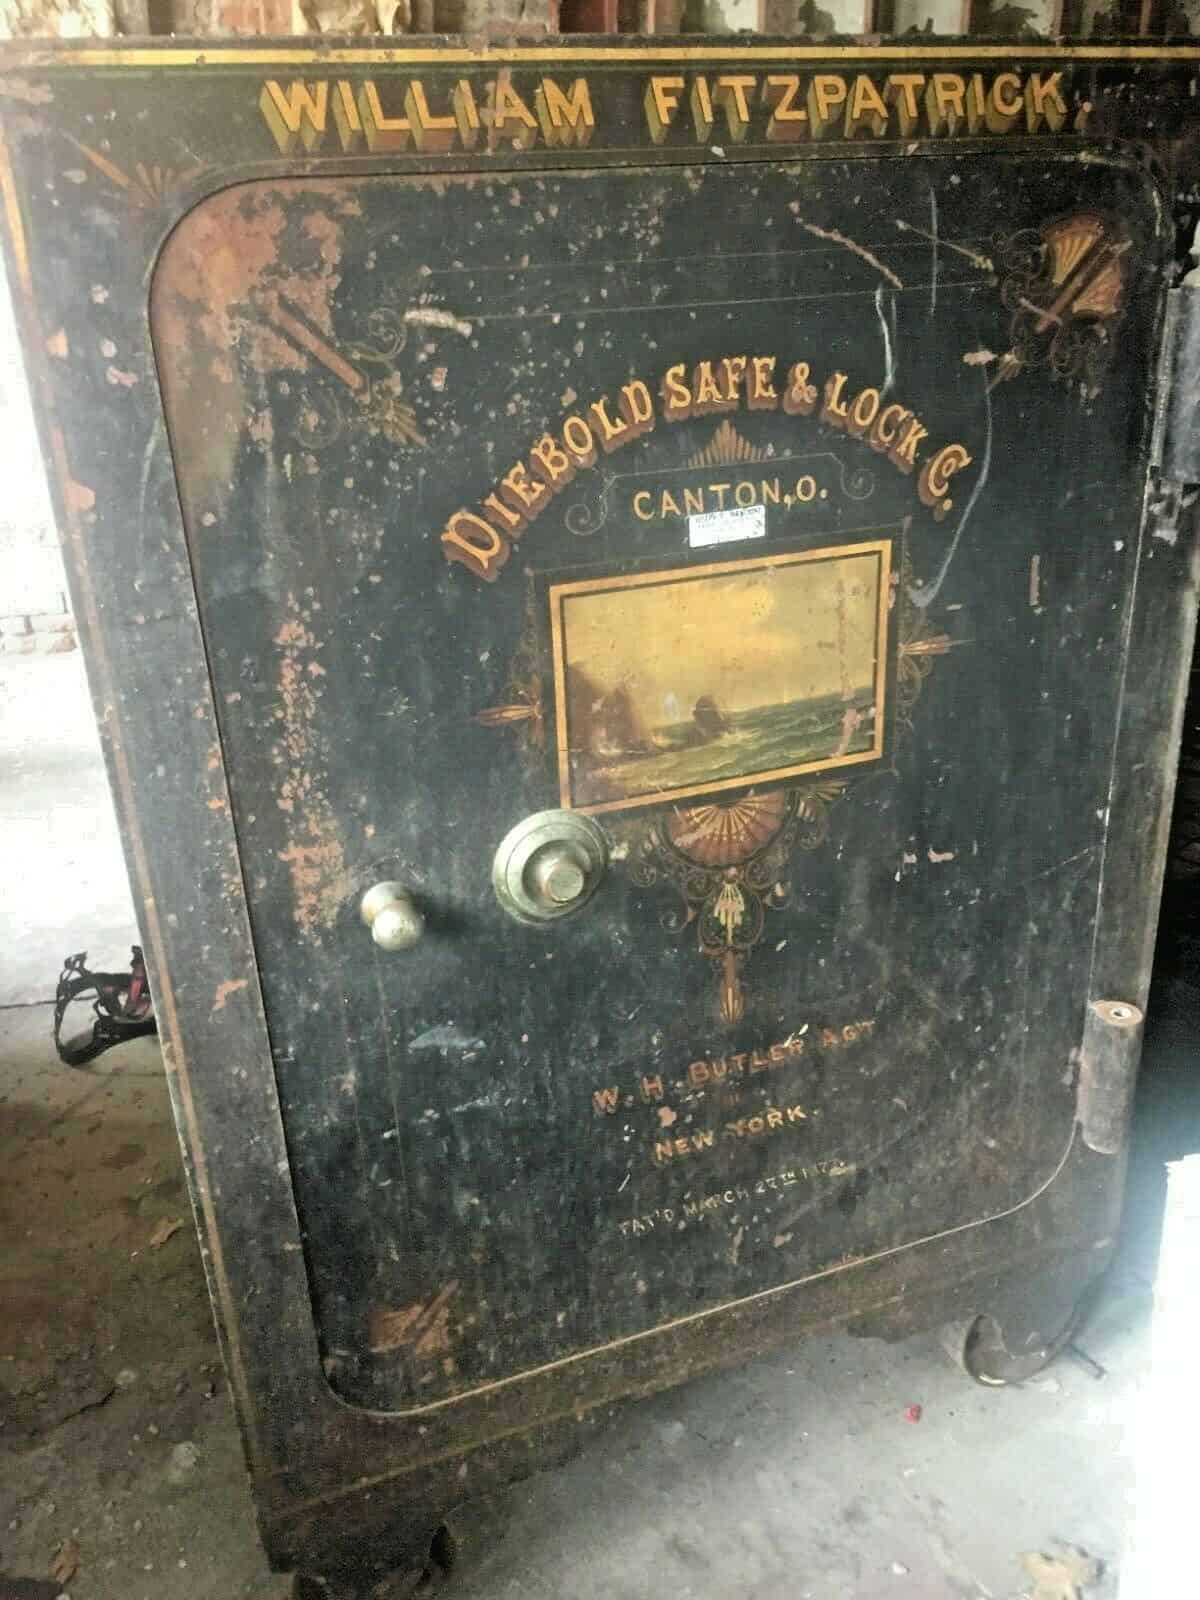 Diebold Safe & Lock Co. Safe From 1887